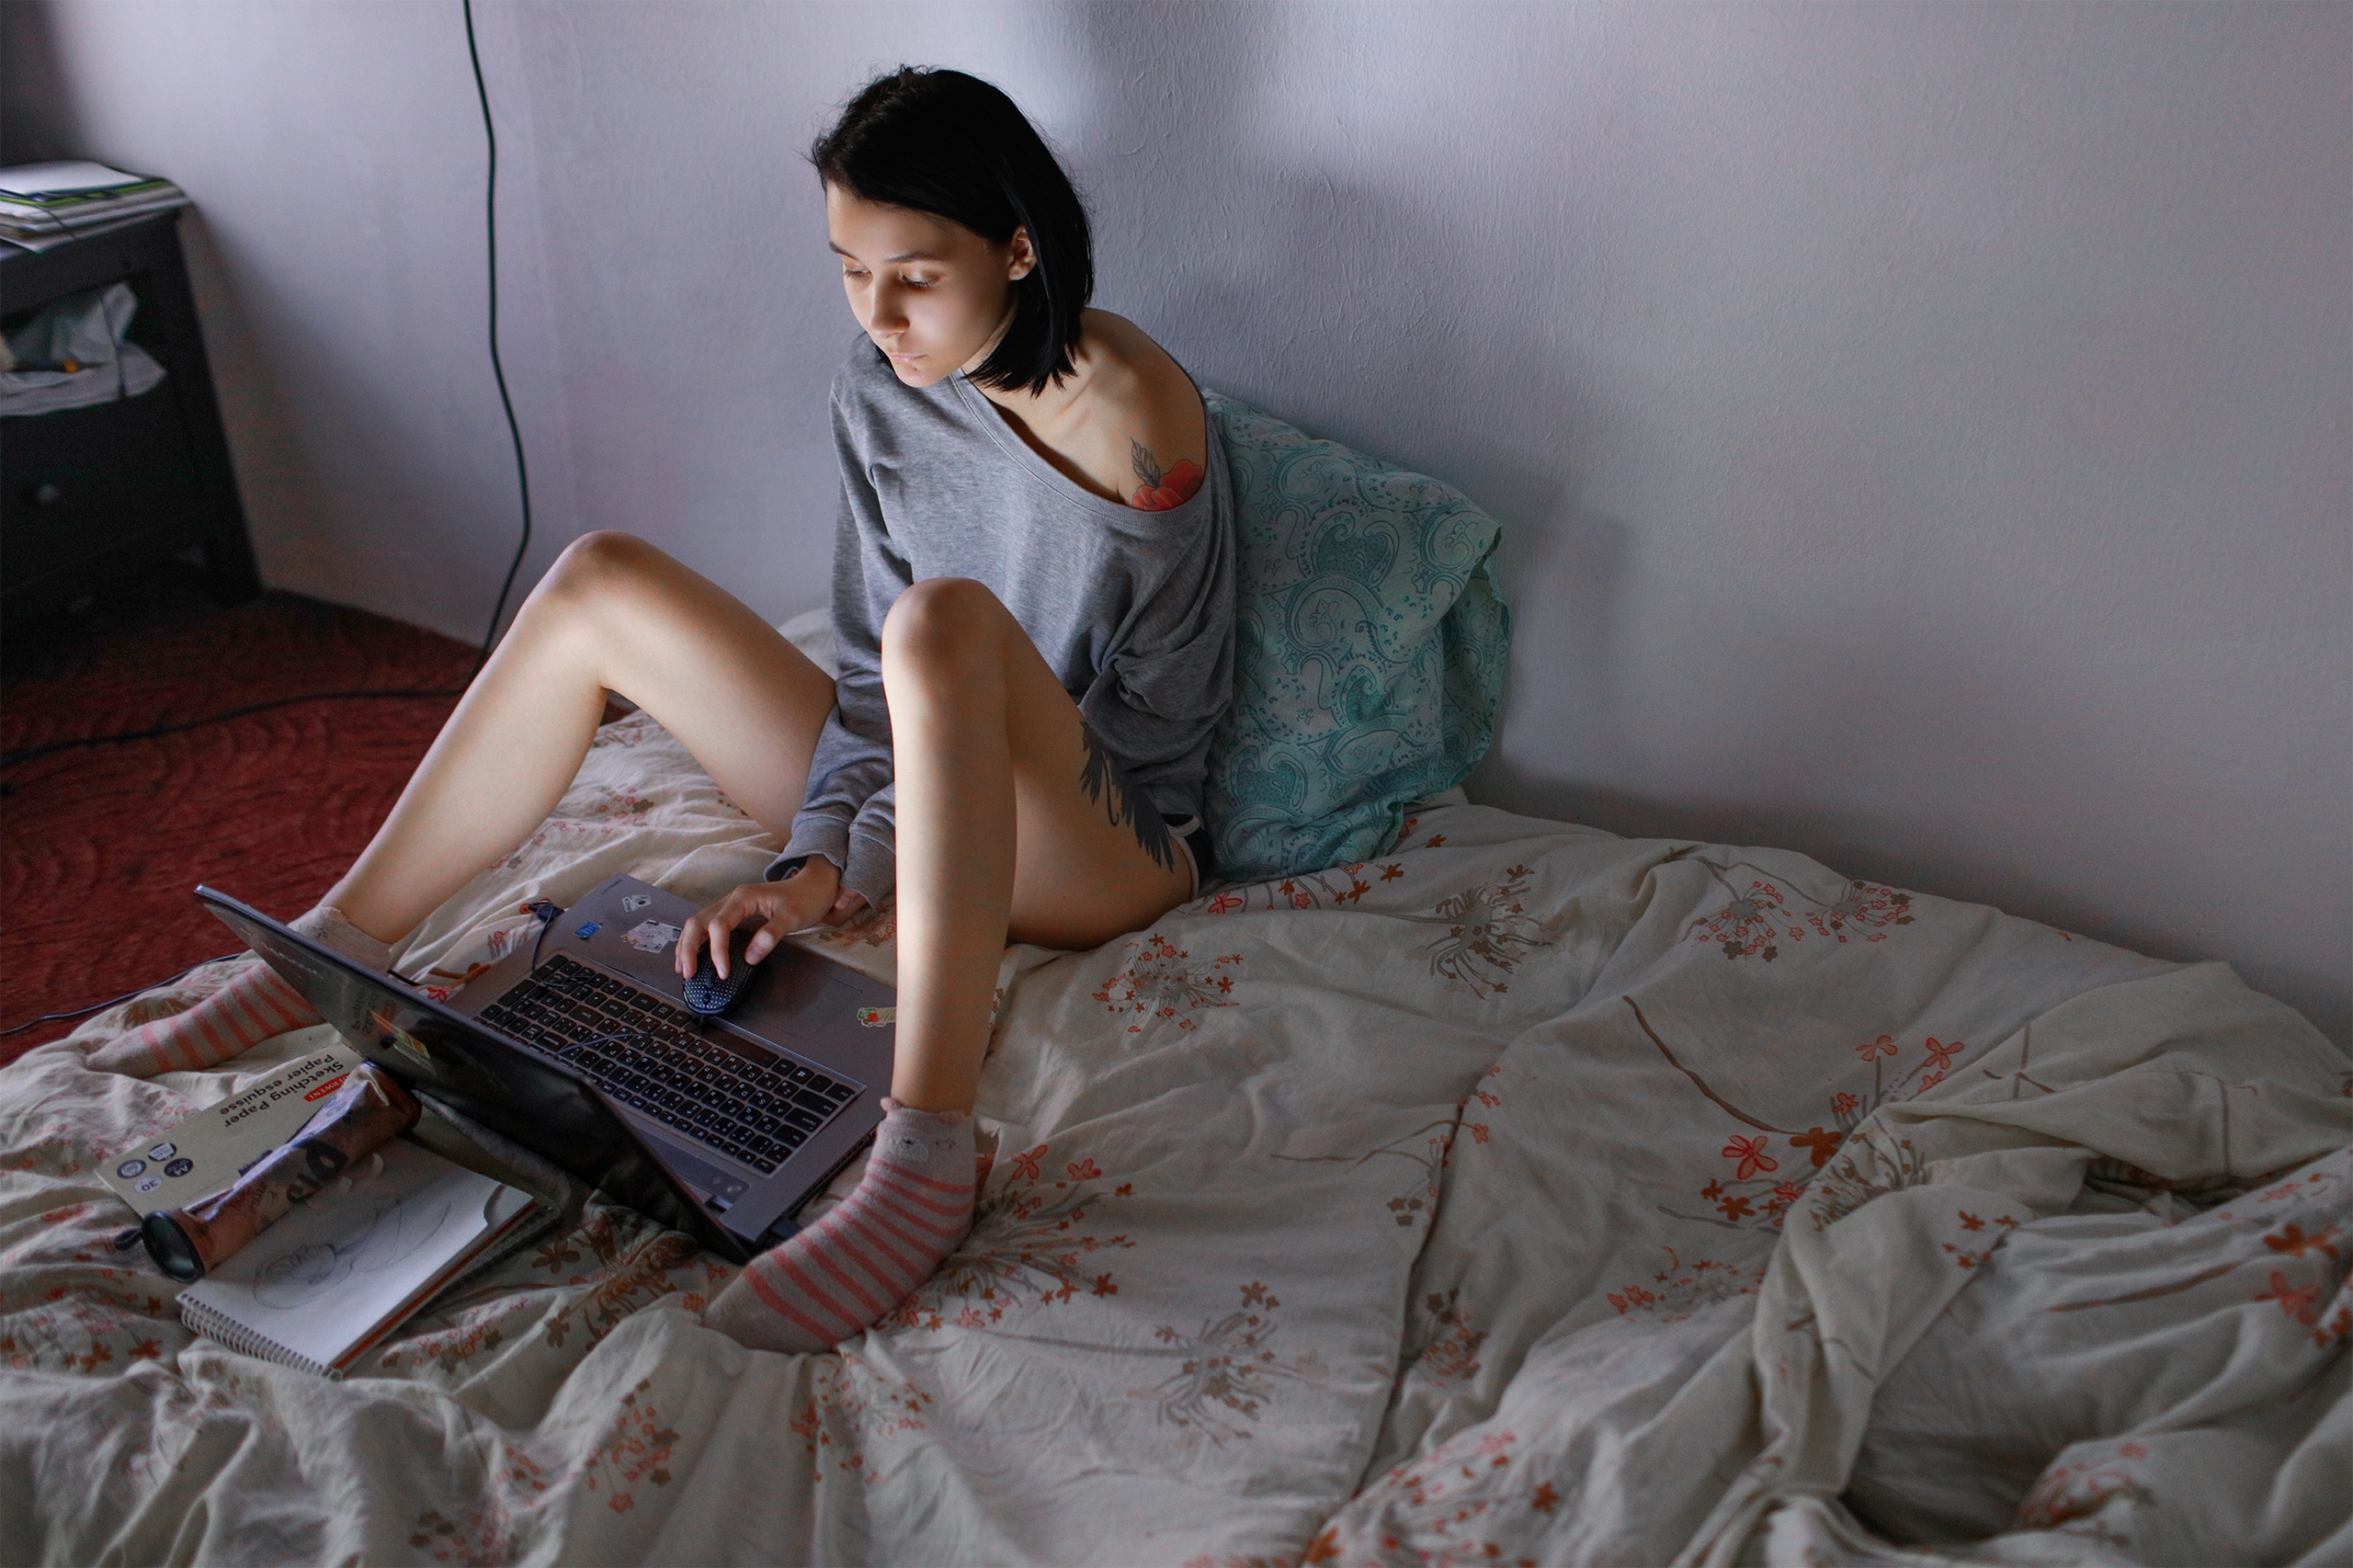 Vlada Heidrich Dark Hair Short Hair Sweatshirts Bare Shoulders Women Model Sitting In Bed Socks Inke 2560x1706